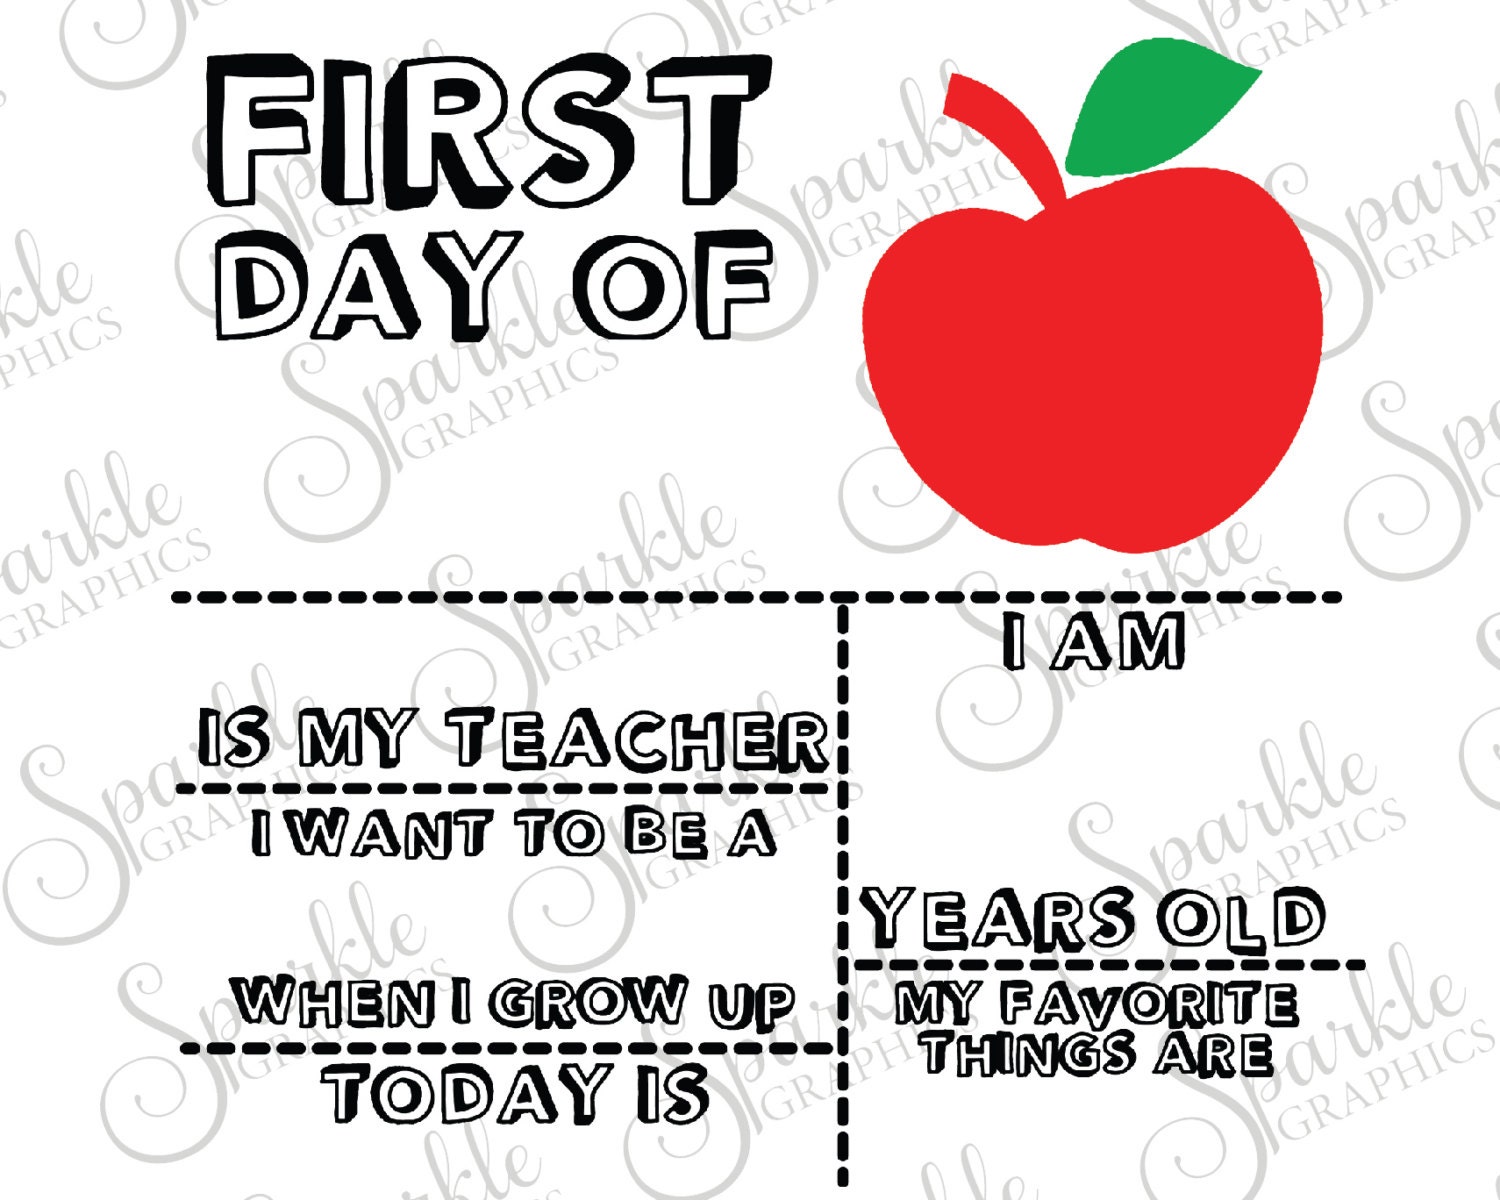 Download First Day Of School Sign School Kids Elementary School Primary